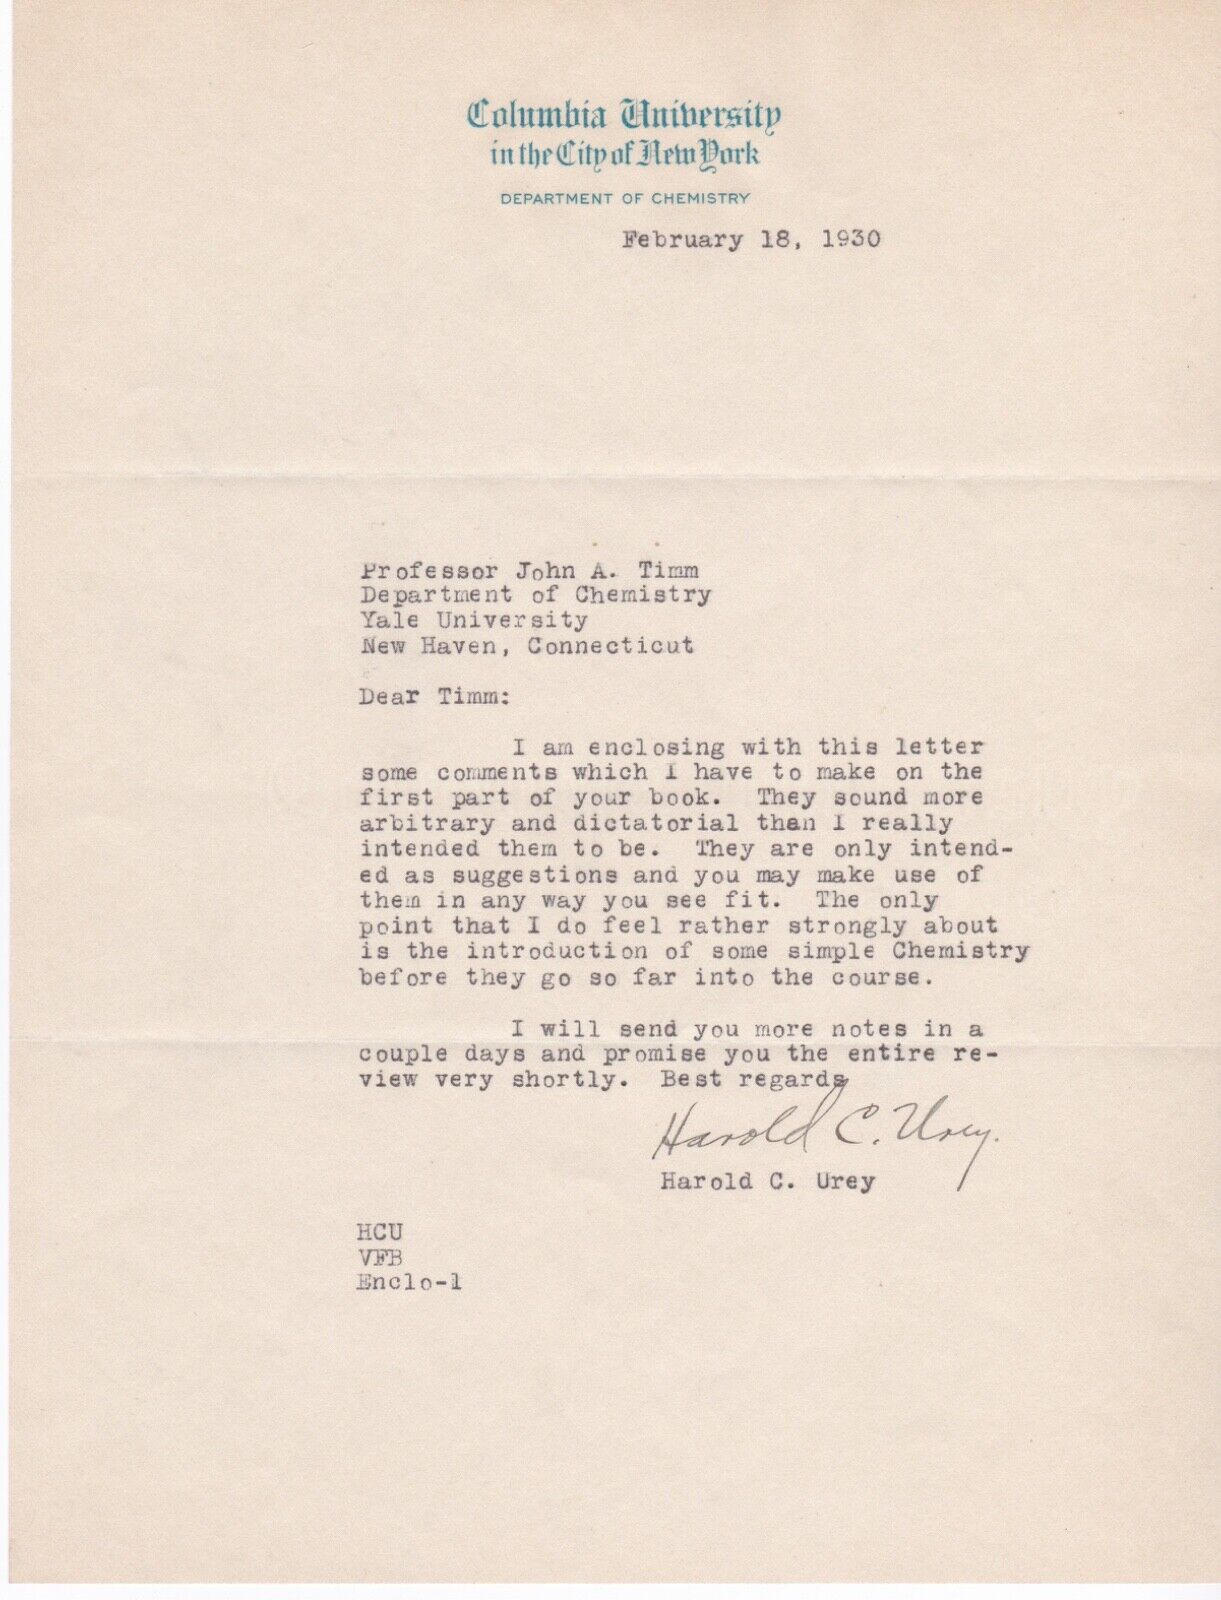 Harold C. Urey Signed Letter (1934 Nobel Prize in Chemistry)